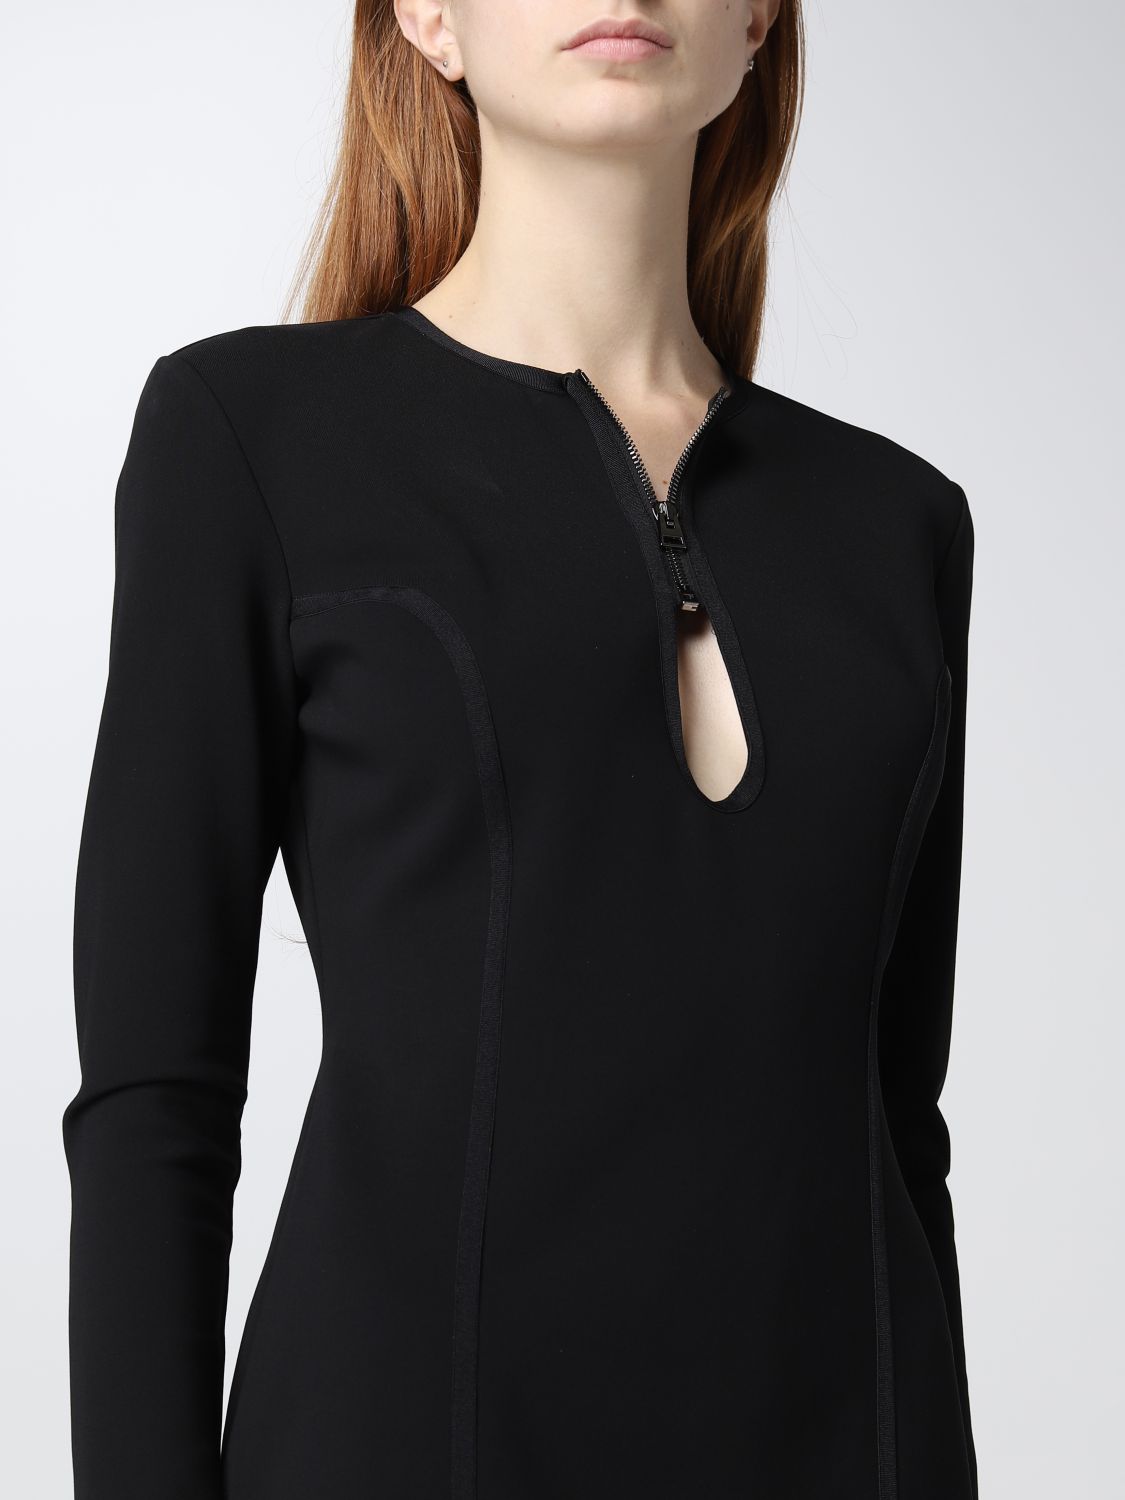 Dress Tom Ford: Tom Ford dress for woman black 4